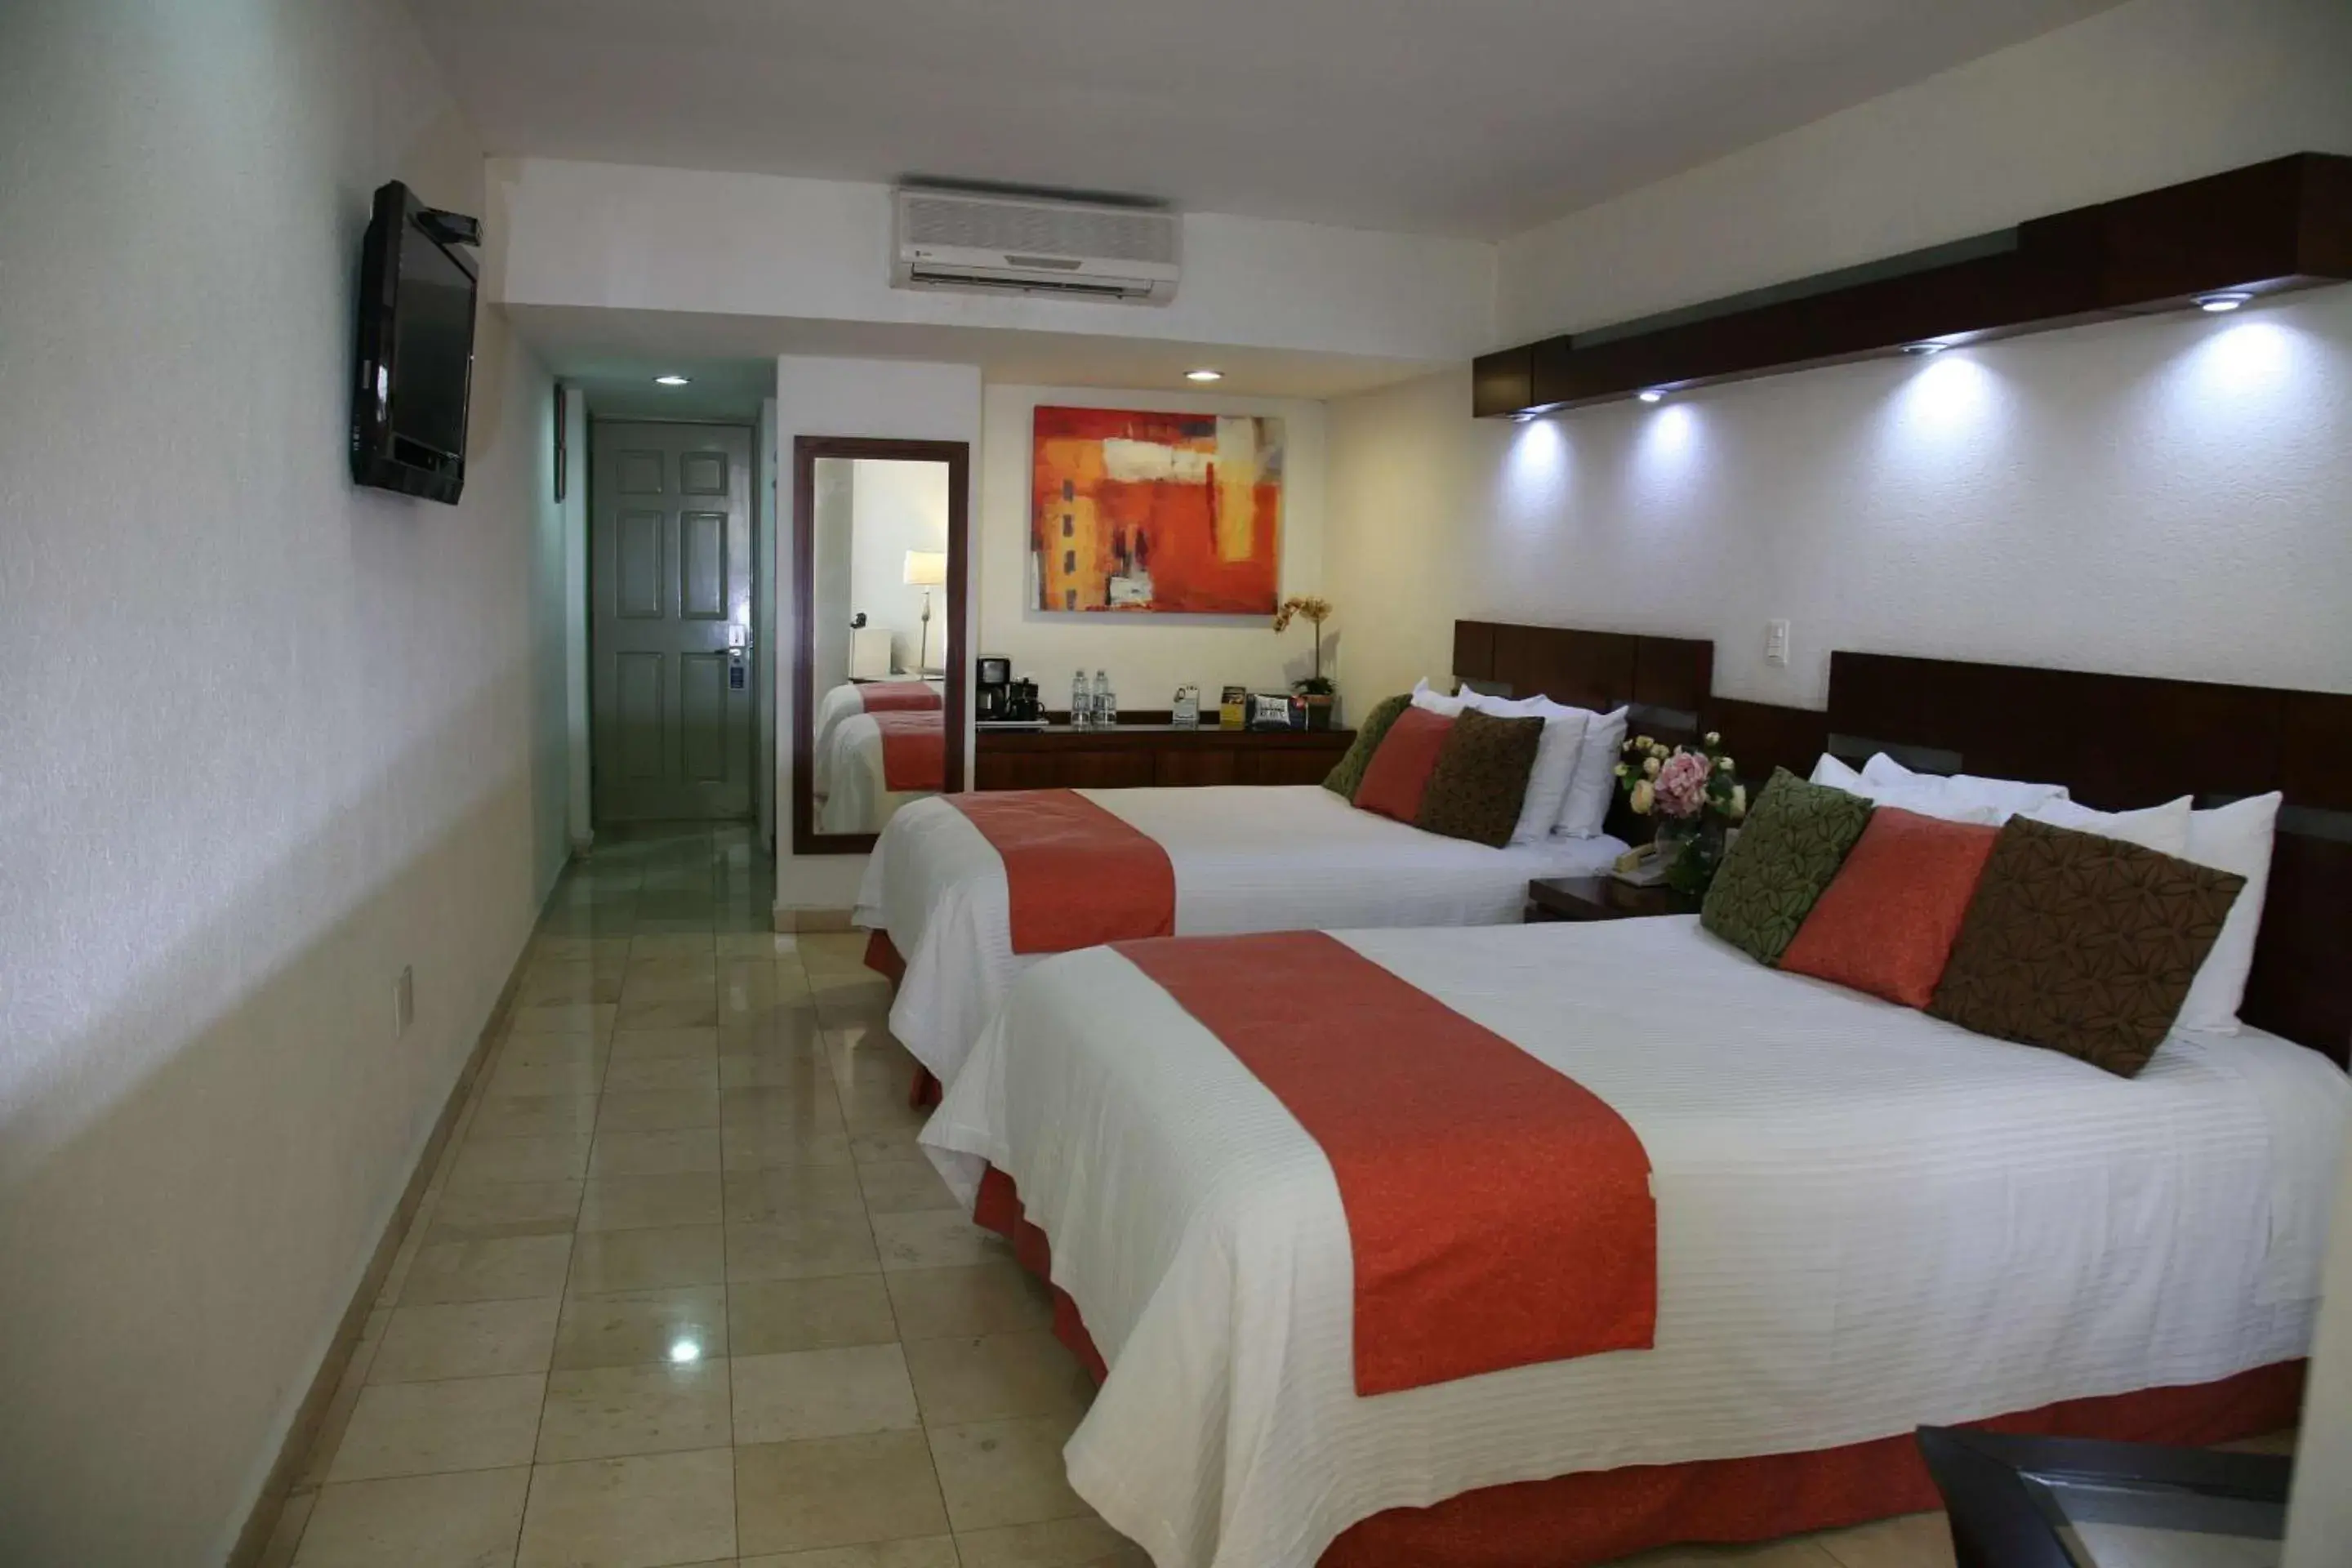 Photo of the whole room in Hotel Poza Rica Centro